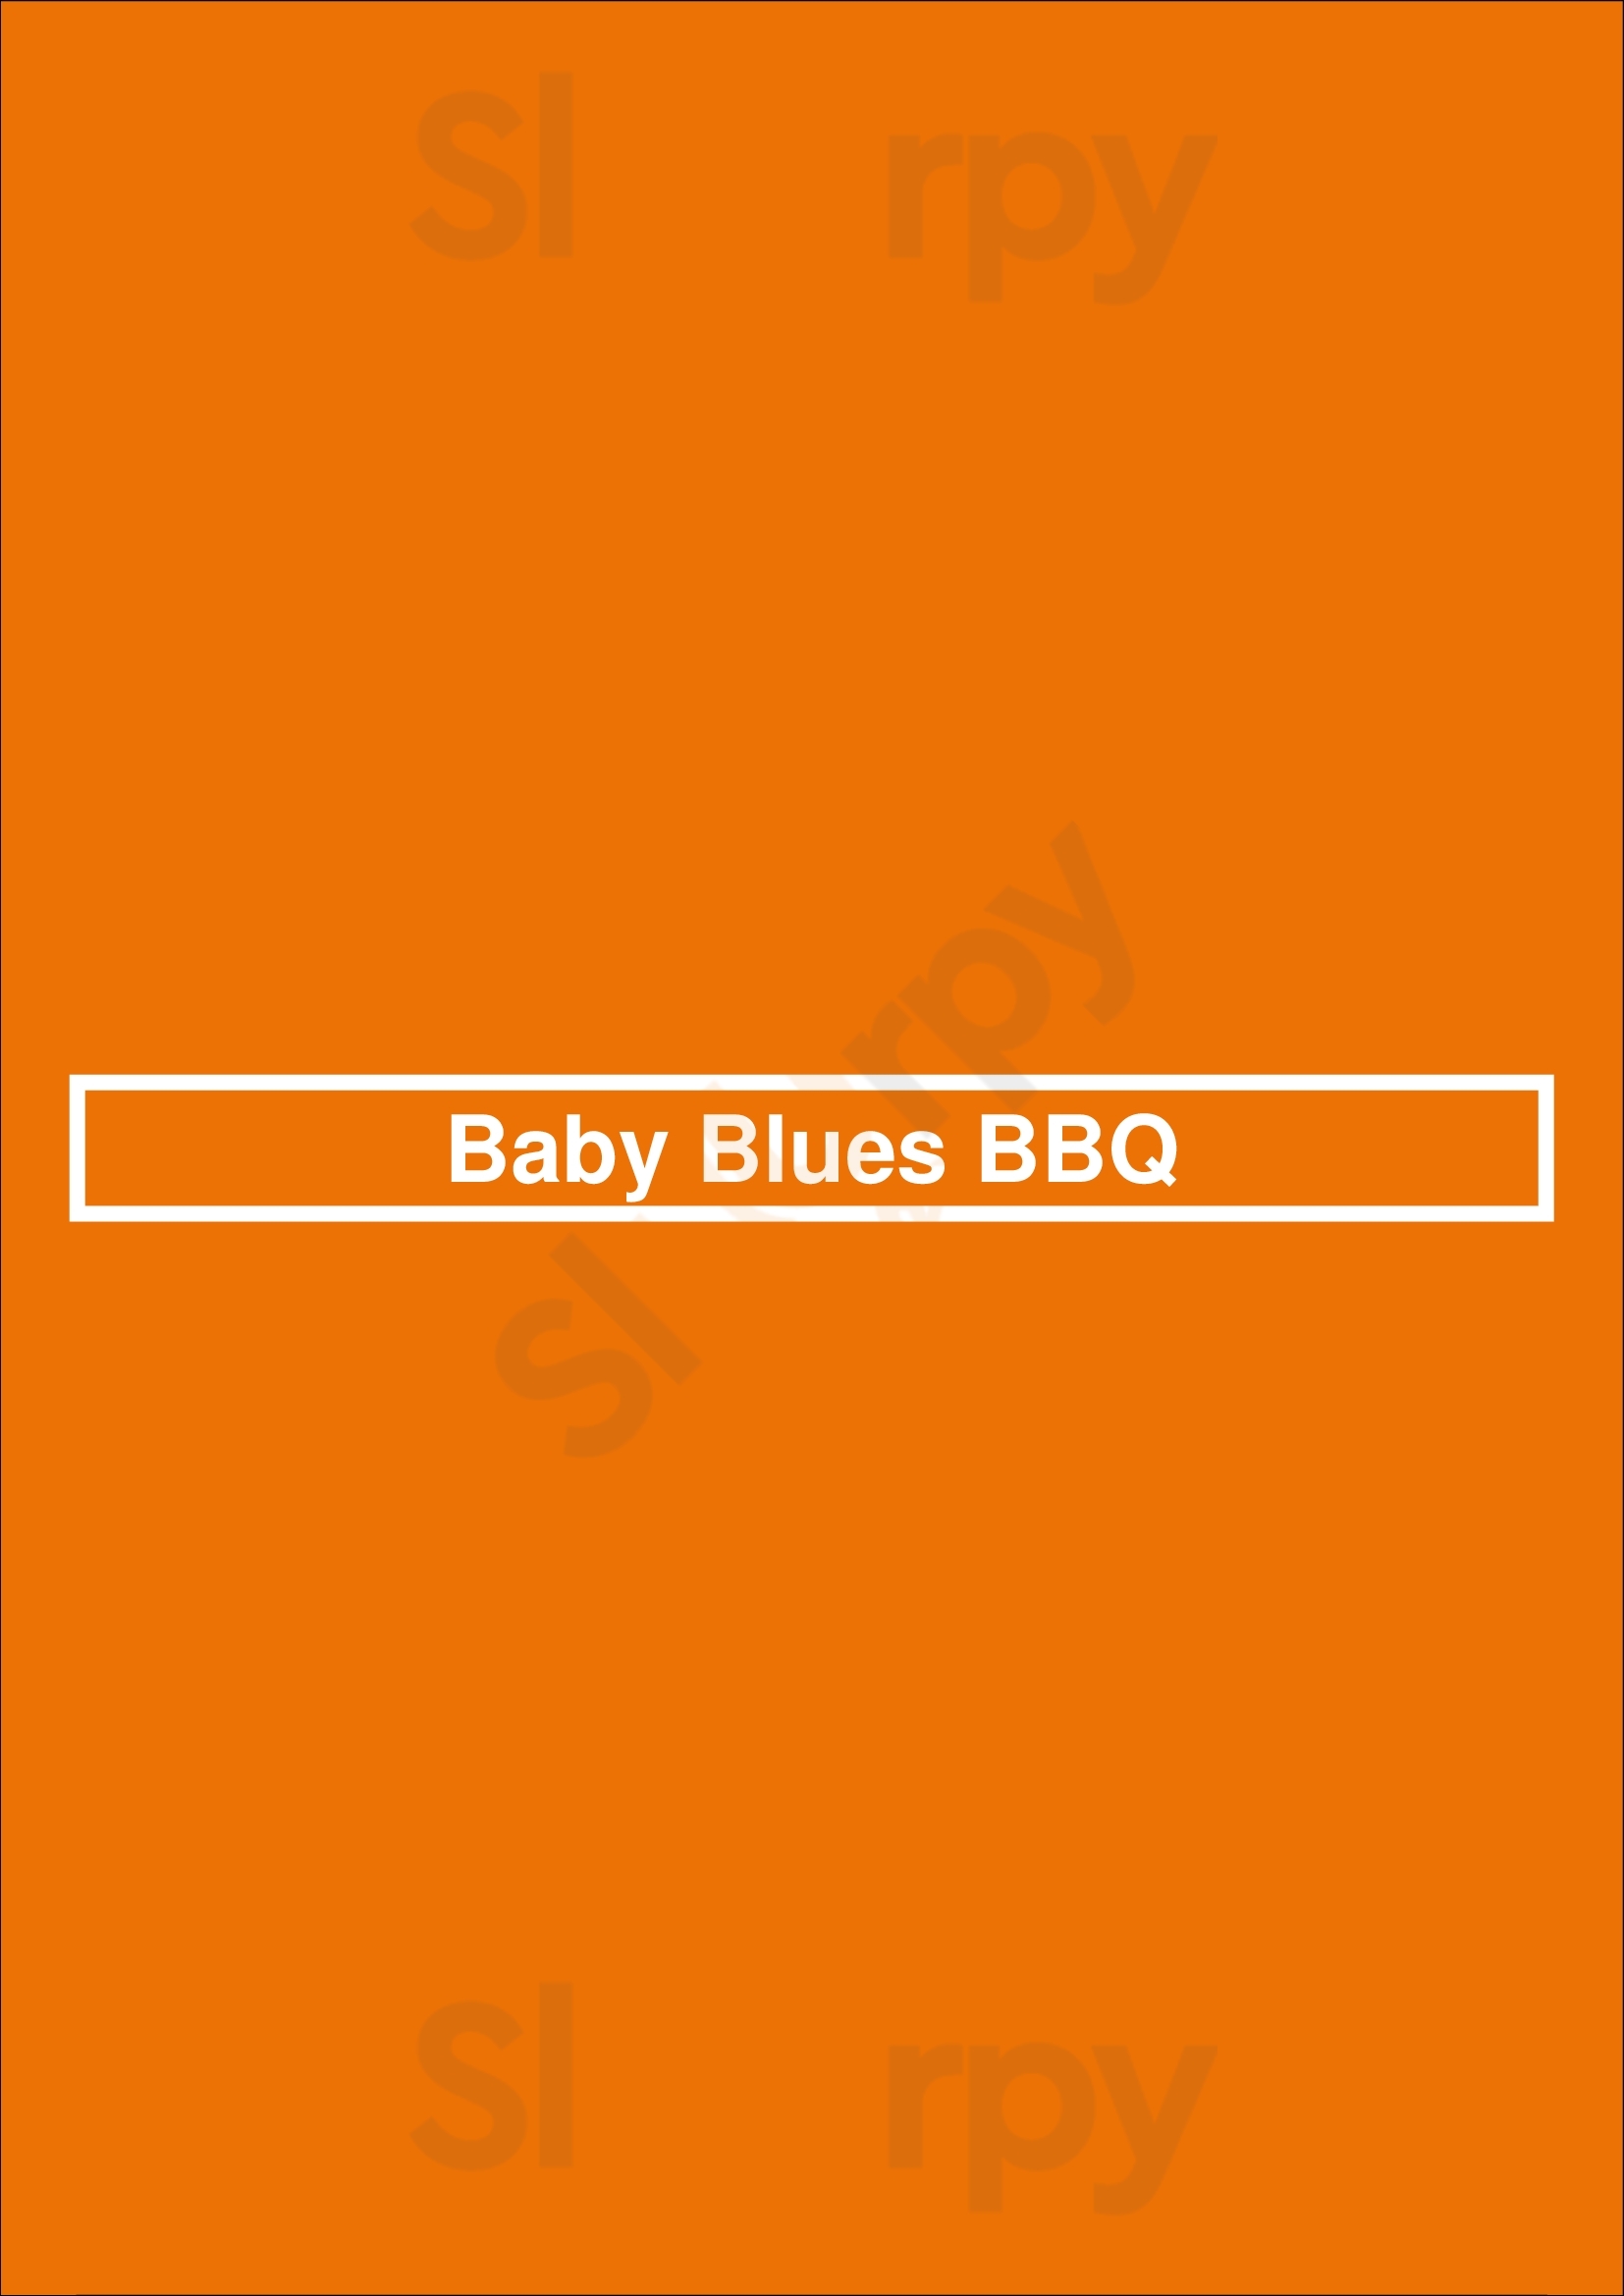 Baby Blues Bbq San Francisco Menu - 1